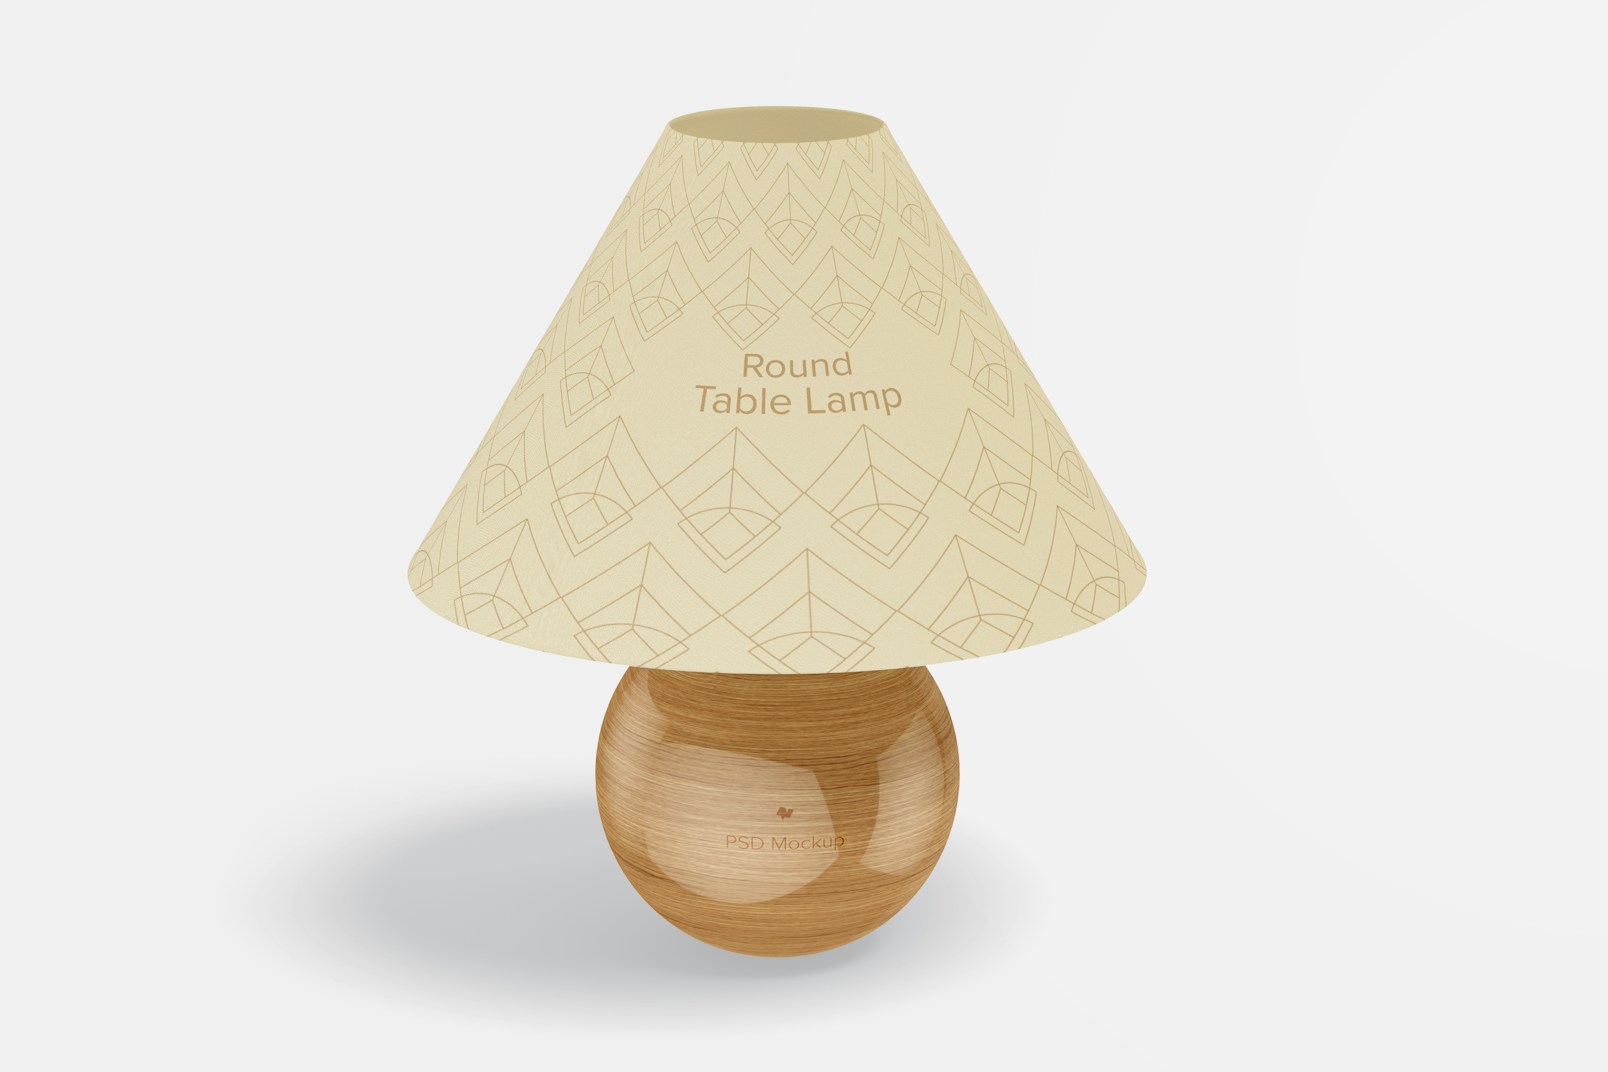 Round Table Lamp Mockup